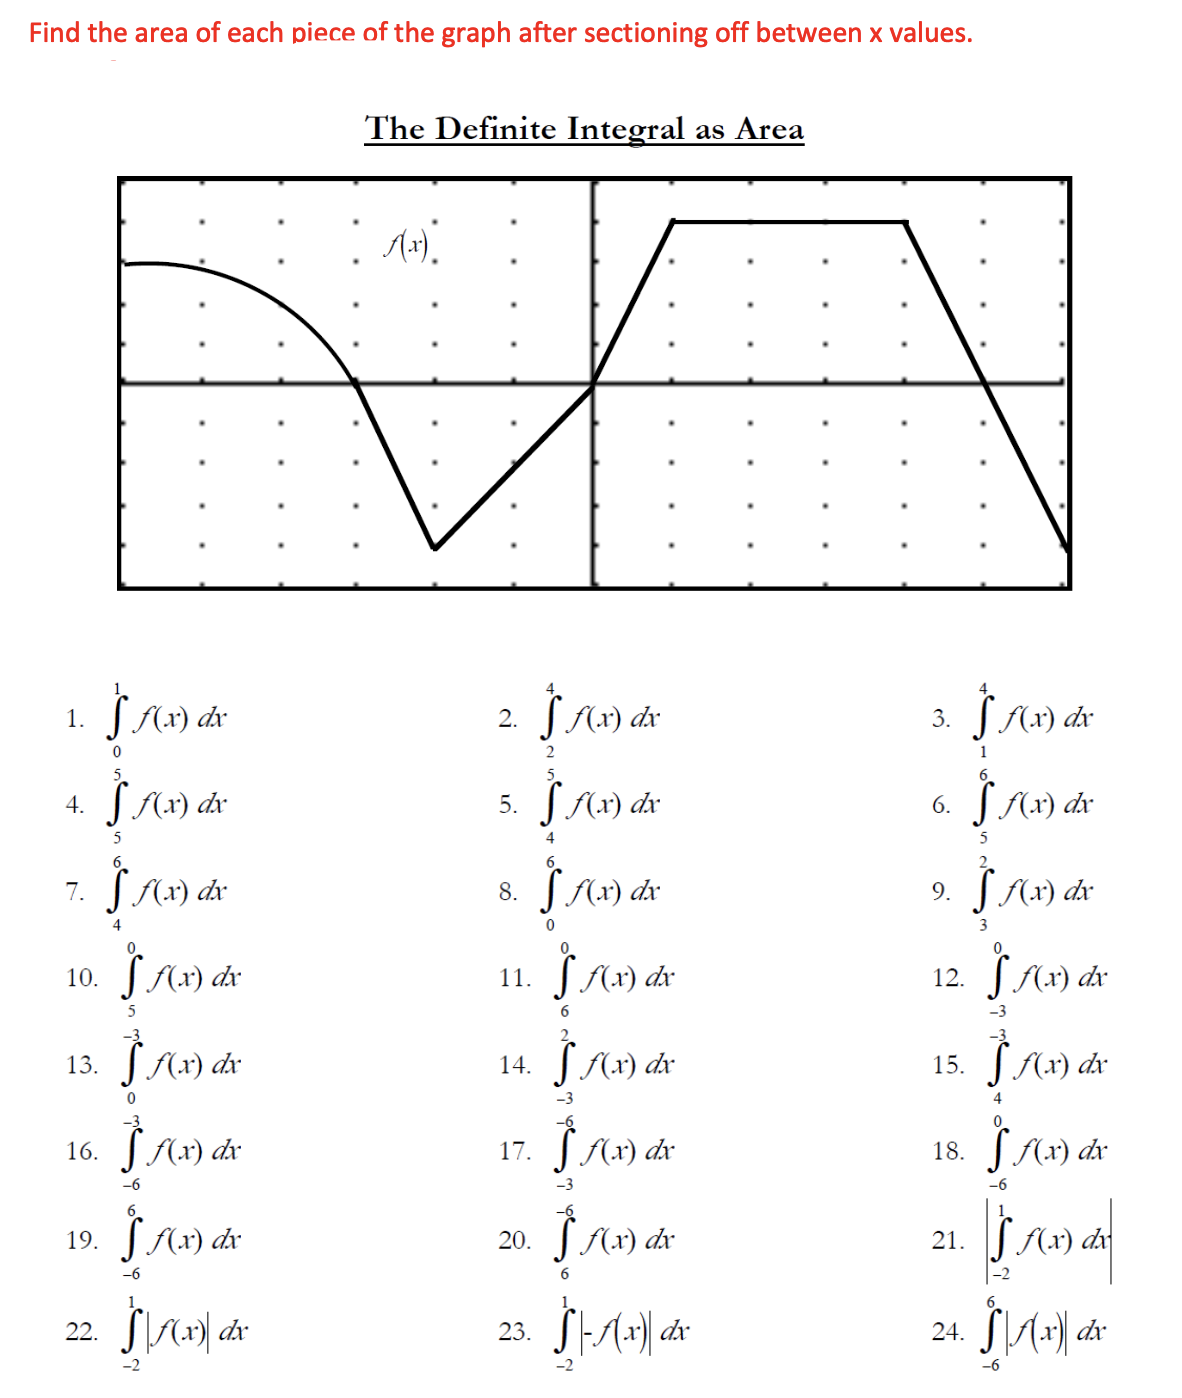 The Definite Integral as Area
(x) dr
2. J Ax) dr
3. J Ax) dx
1.
S M:x) dr
5. JAx) dx
S Mx) dr
4.
6.
8.
9. I fla) dr
